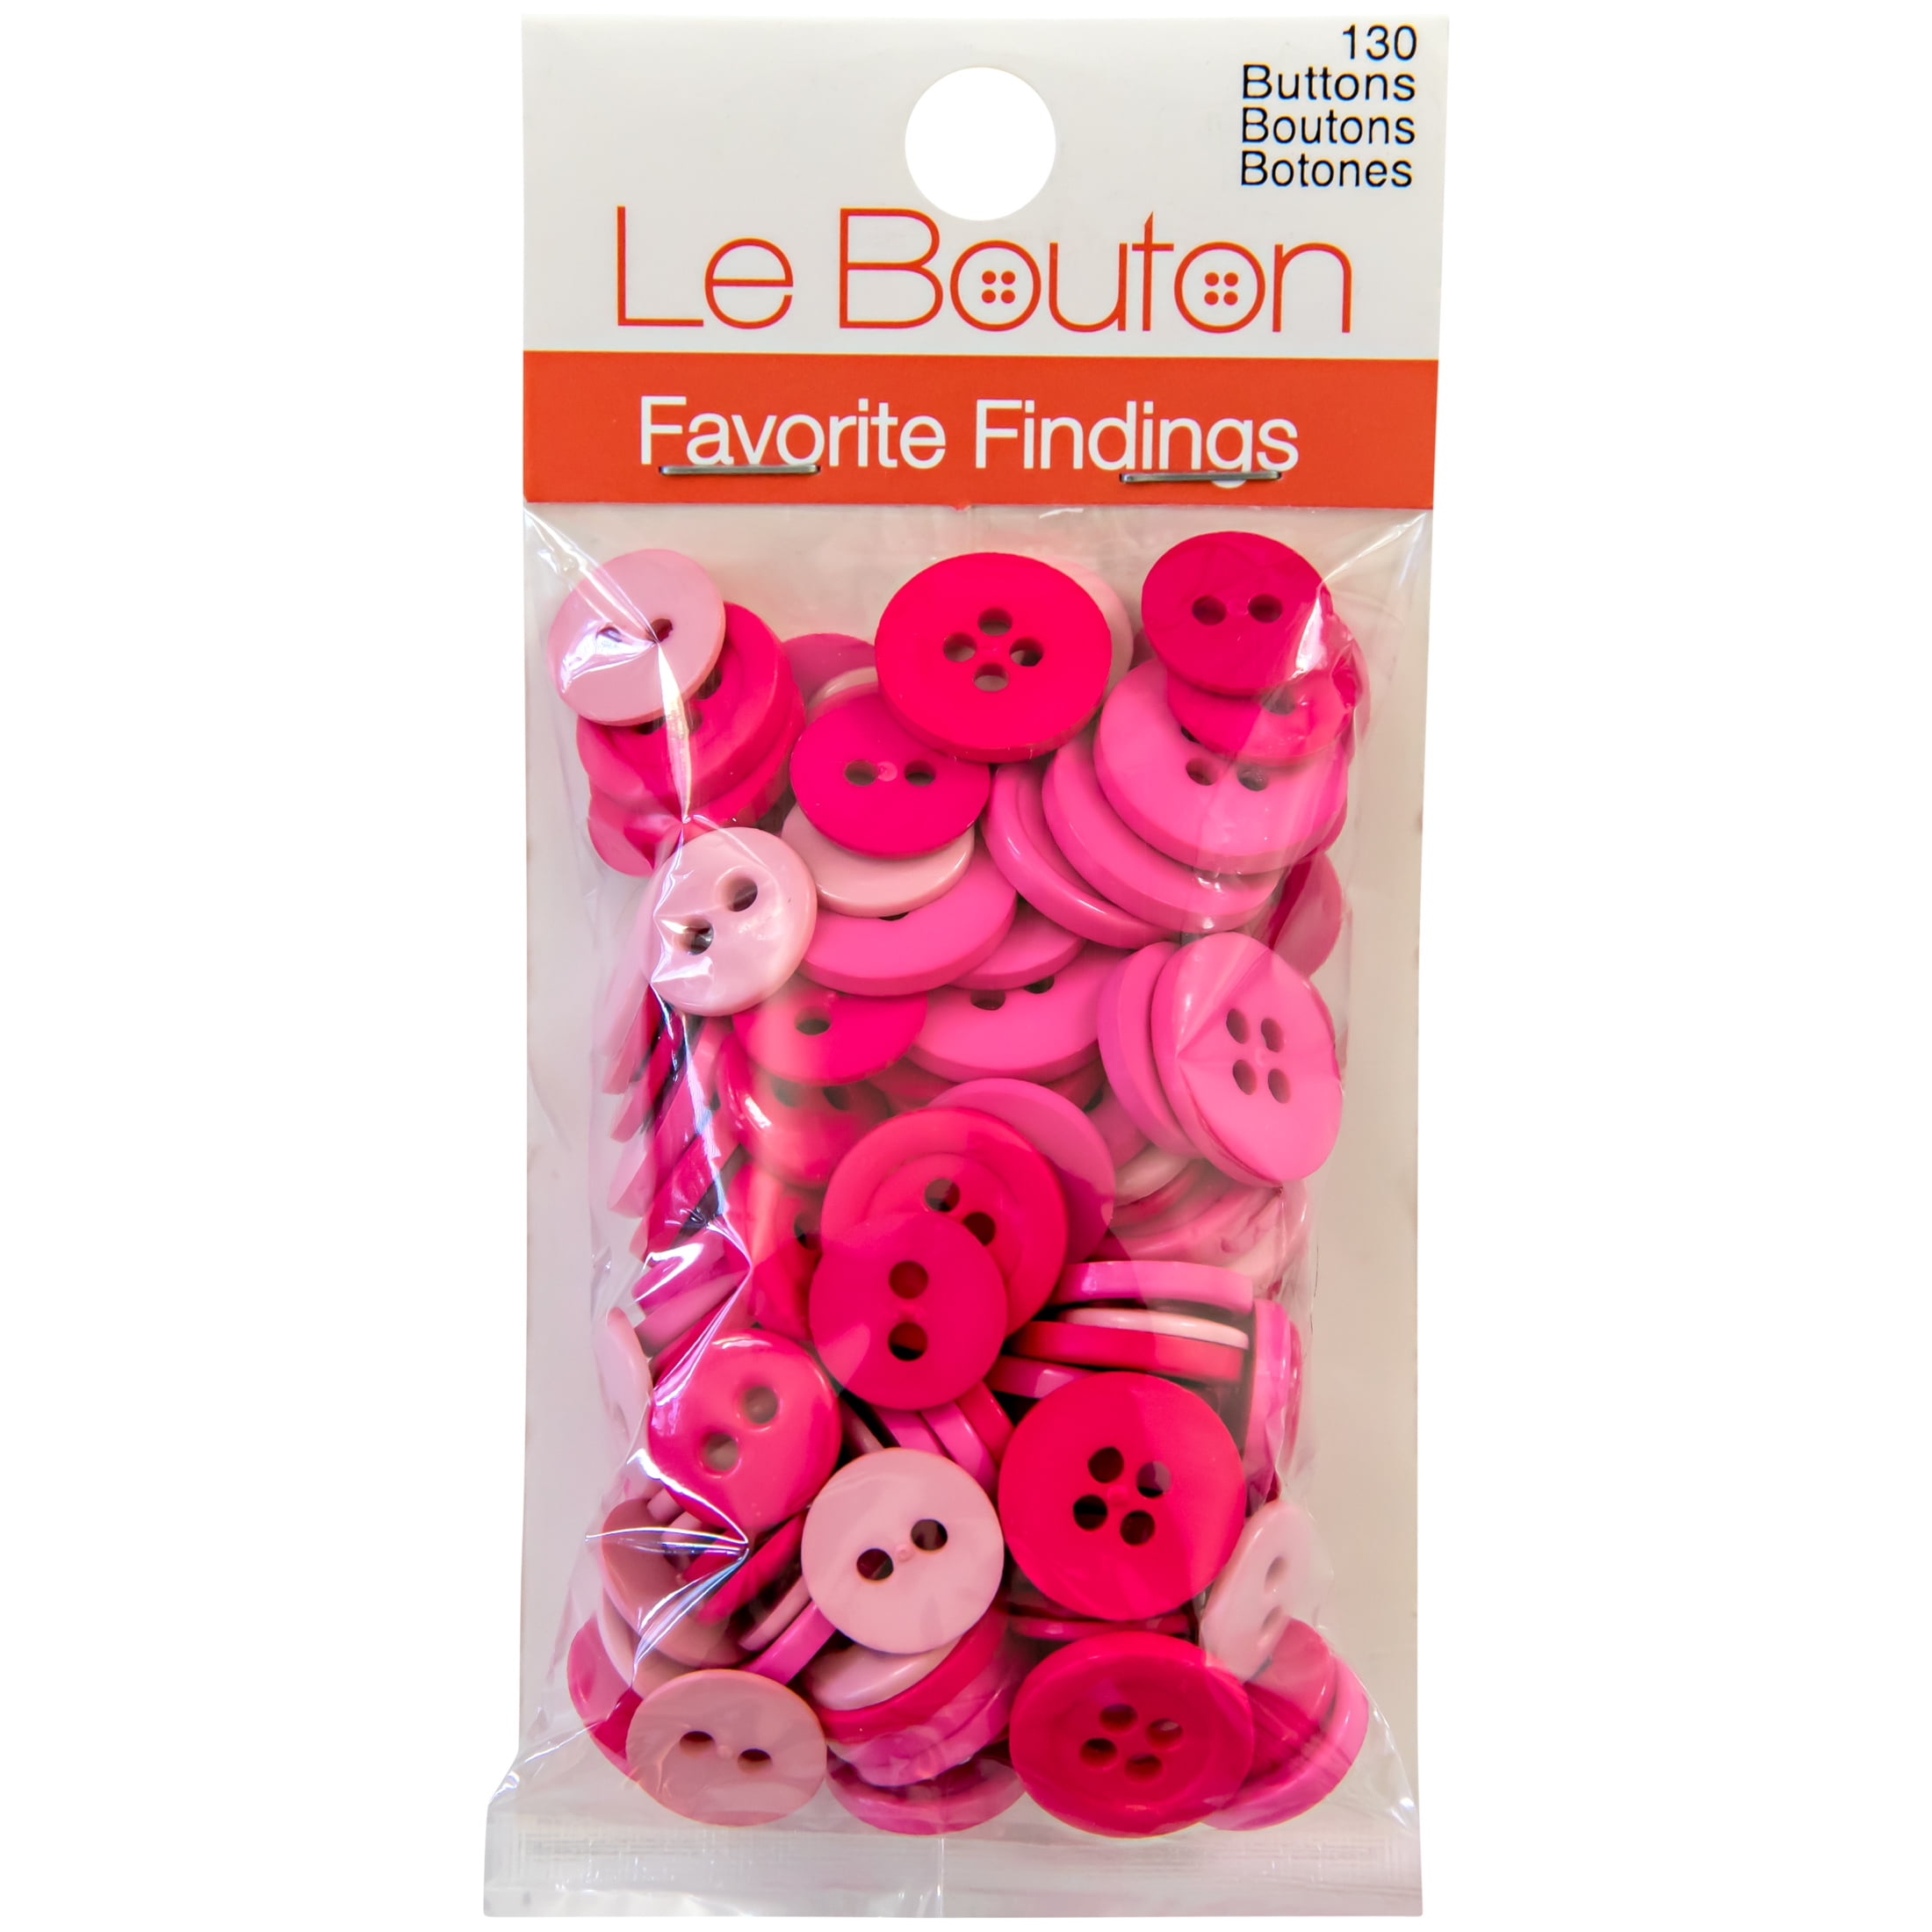 500 Pink Button Small Button Mix, Pink, Sewing Buttons, Craft Buttons, Grab  Bag, Art Buttons 1362 A 